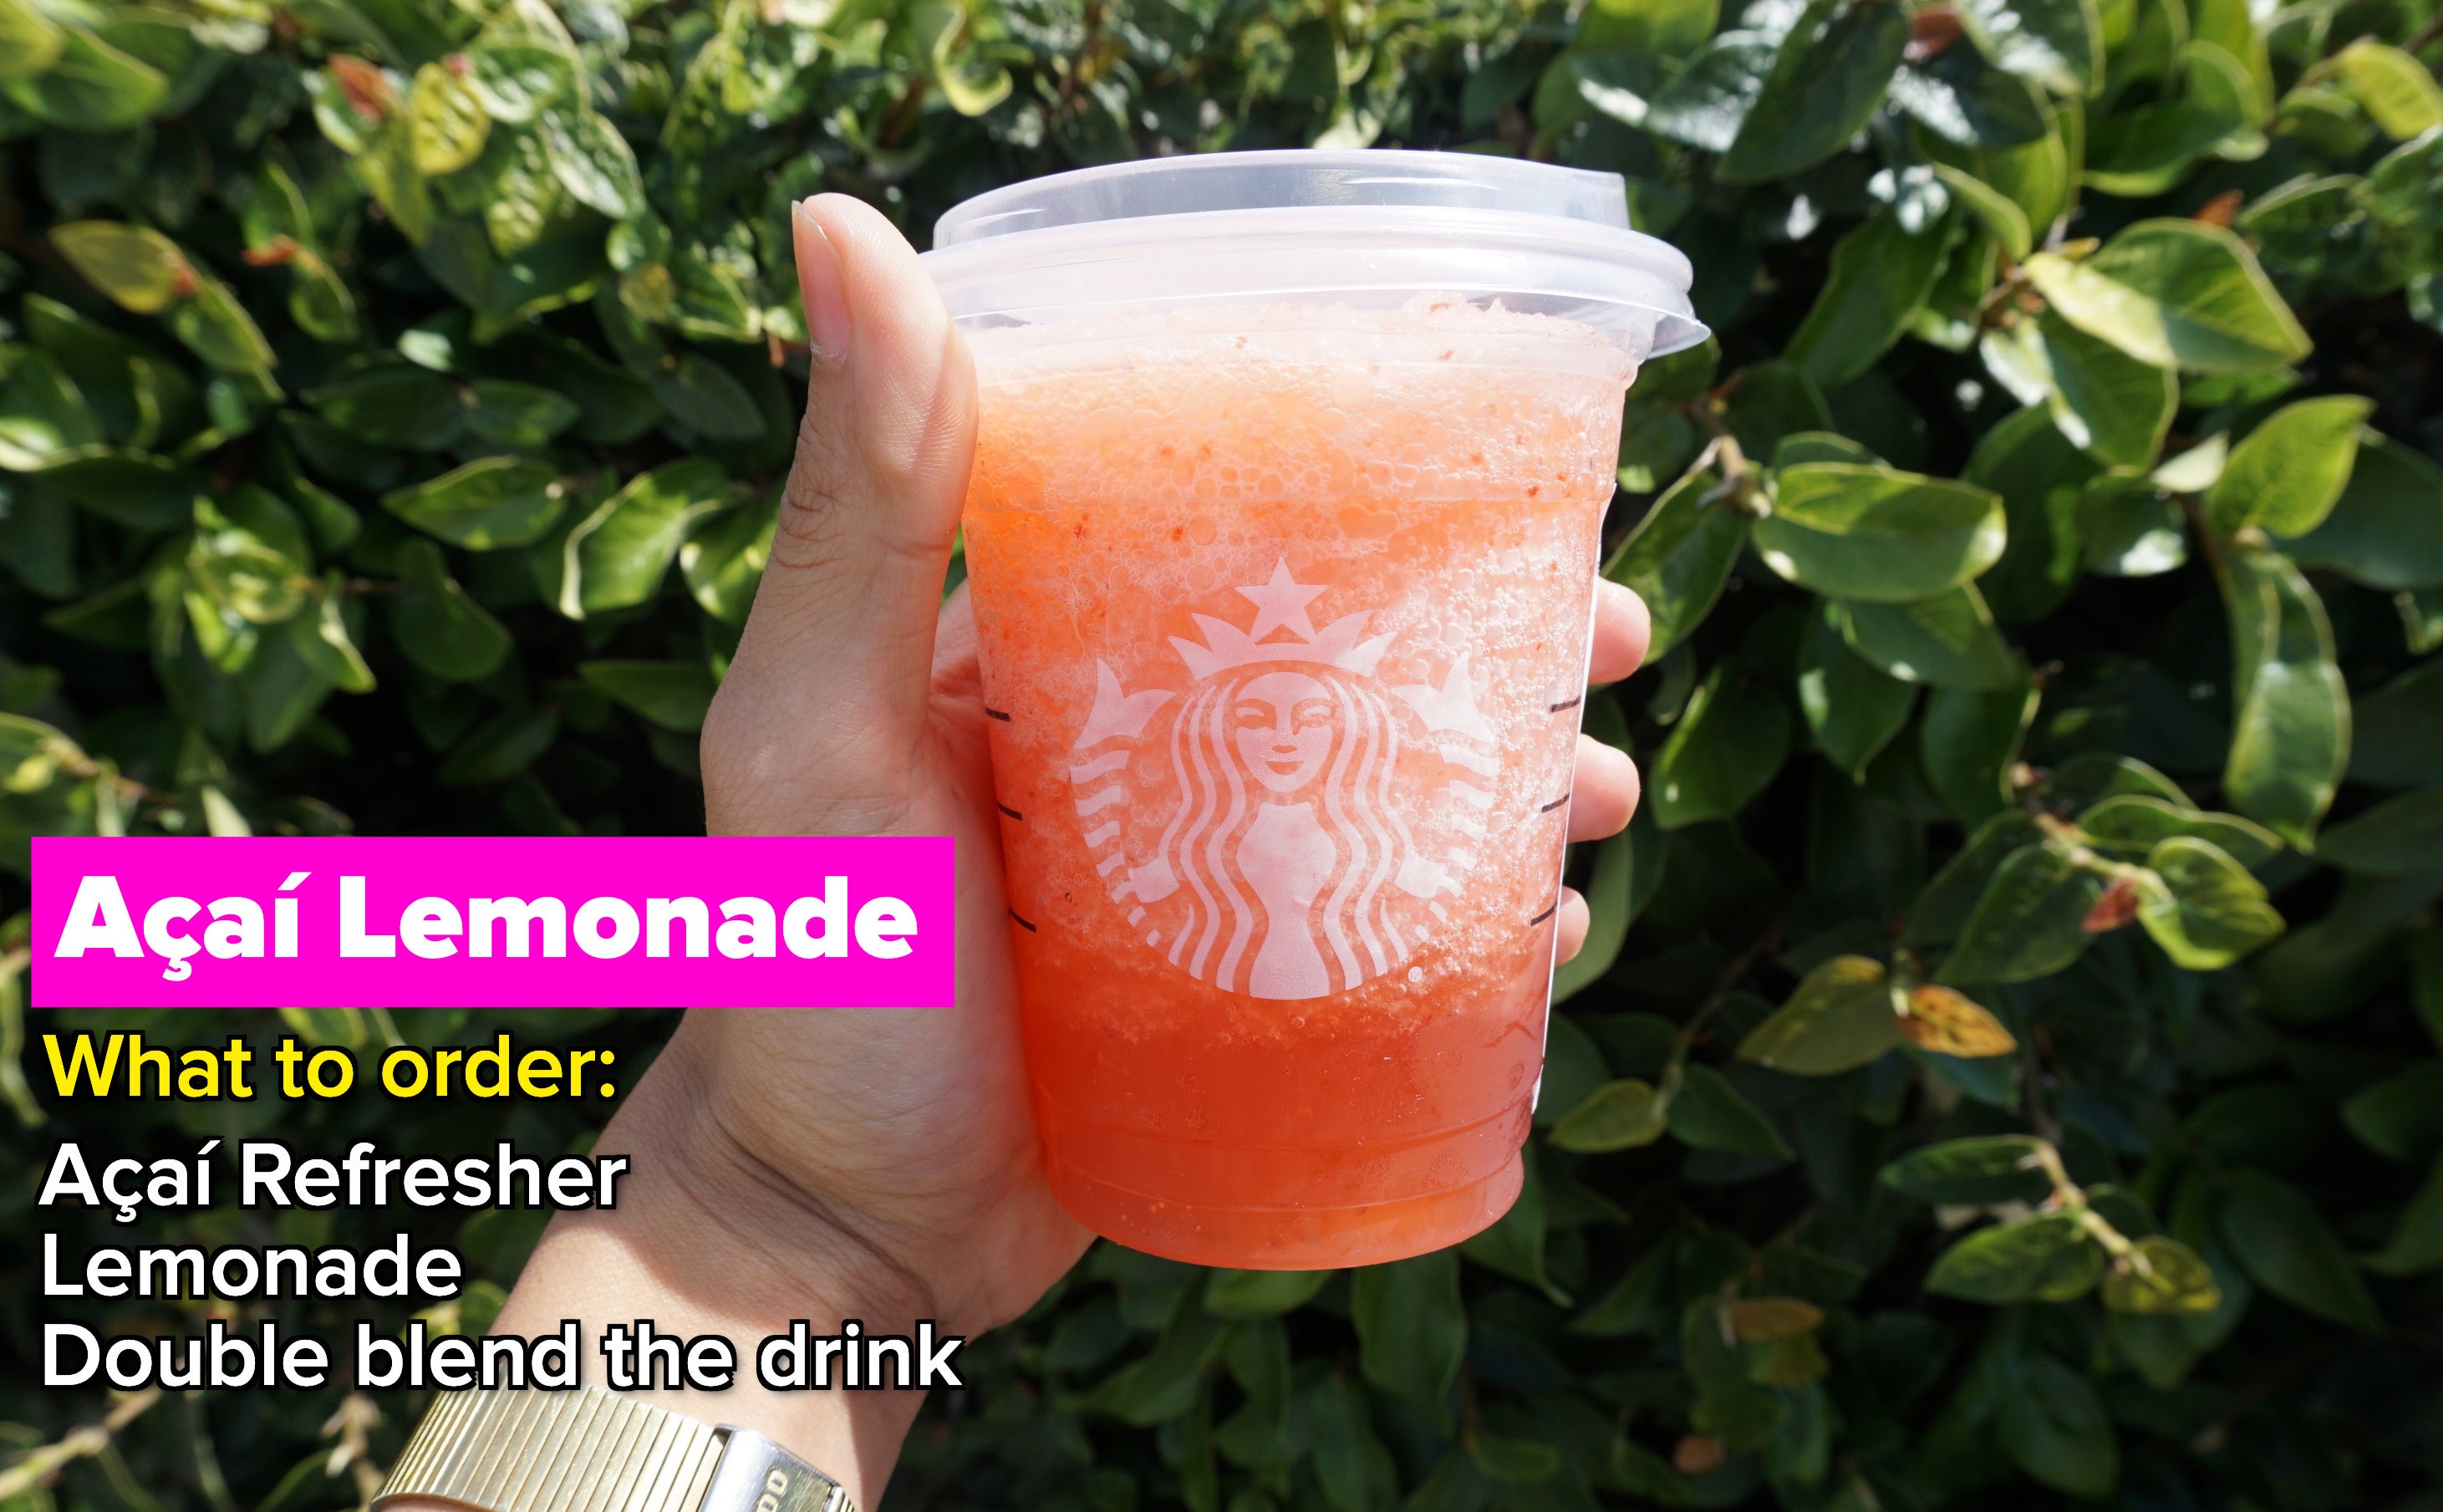 Starbucks Acai Lemonade Refresher drink